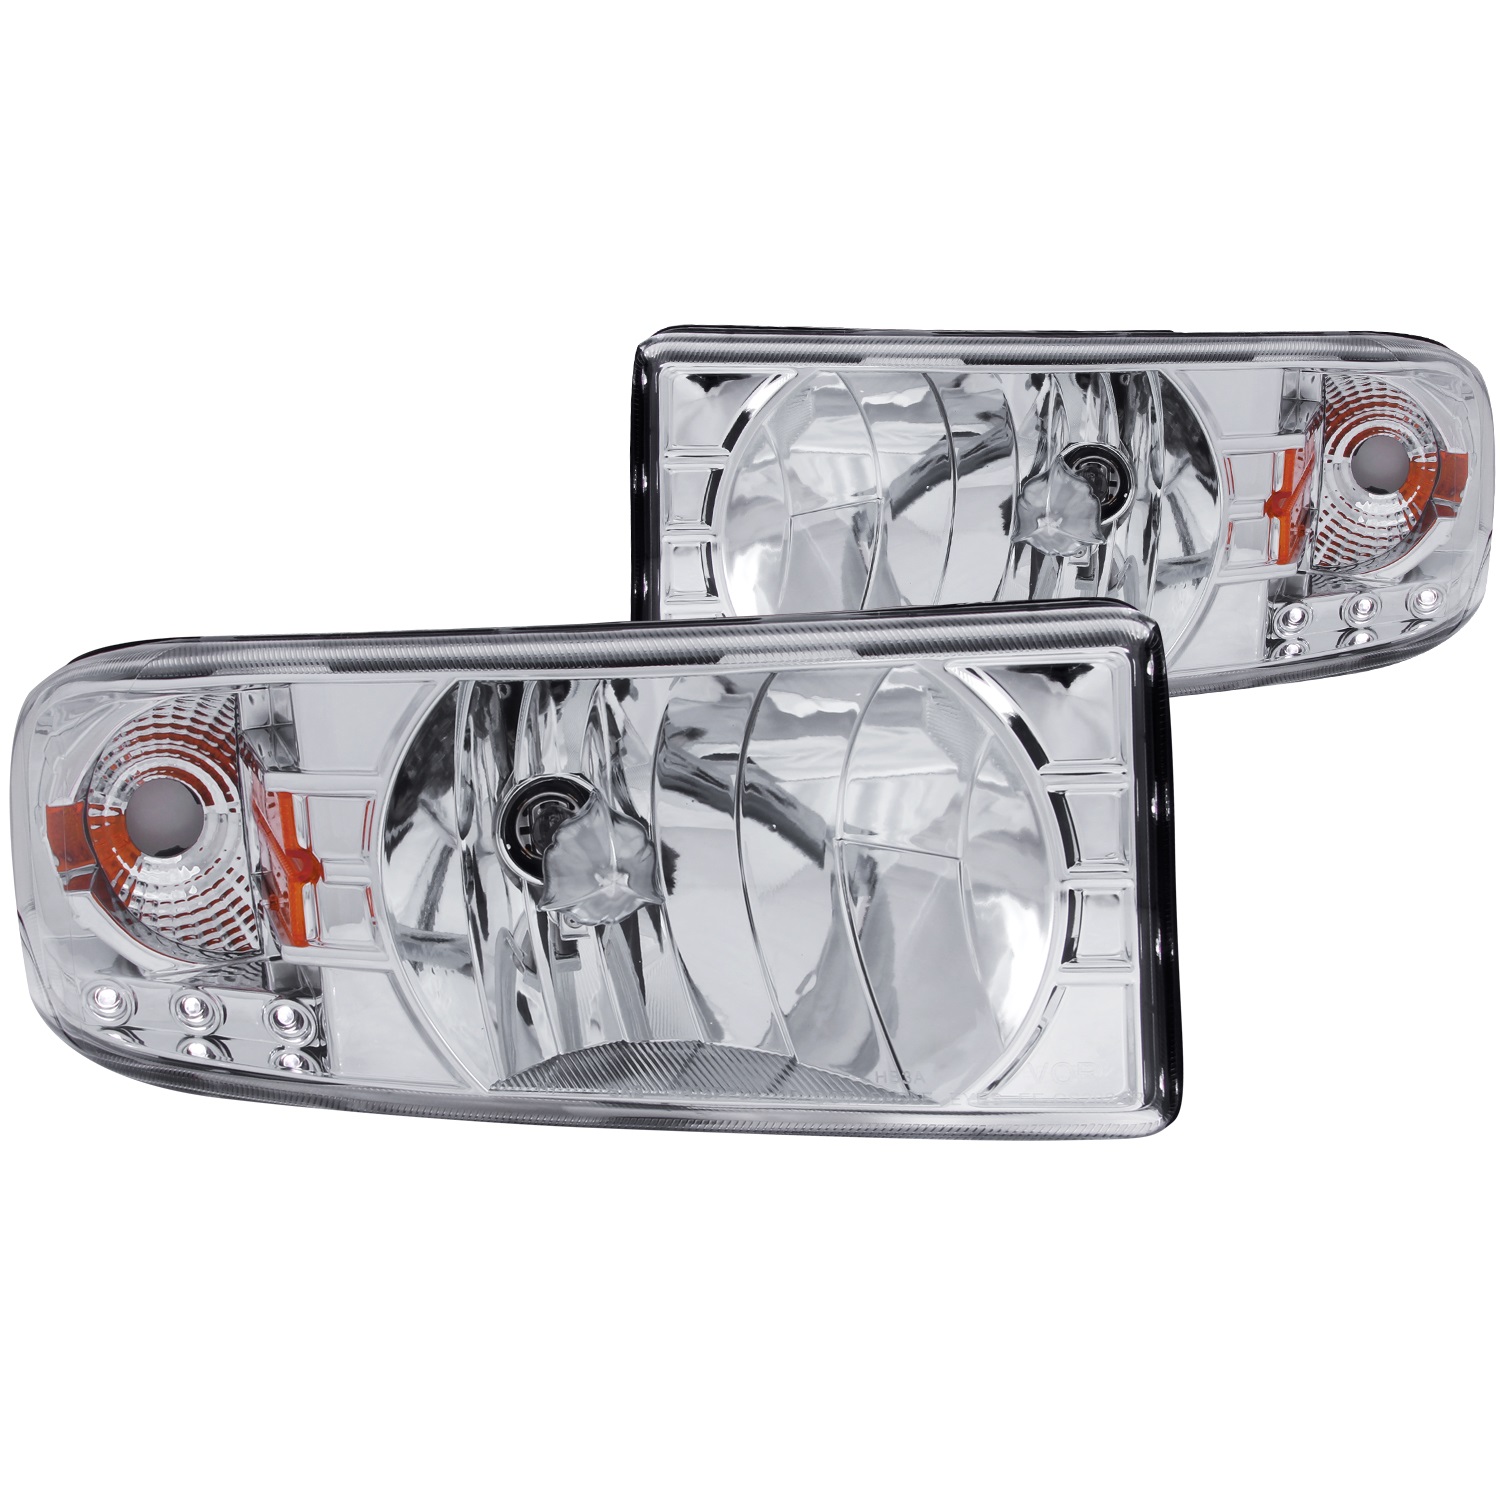 Anzo USA Anzo USA 111206 Crystal Headlight Set Fits 94-02 Ram 1500 Ram 2500 Ram 3500